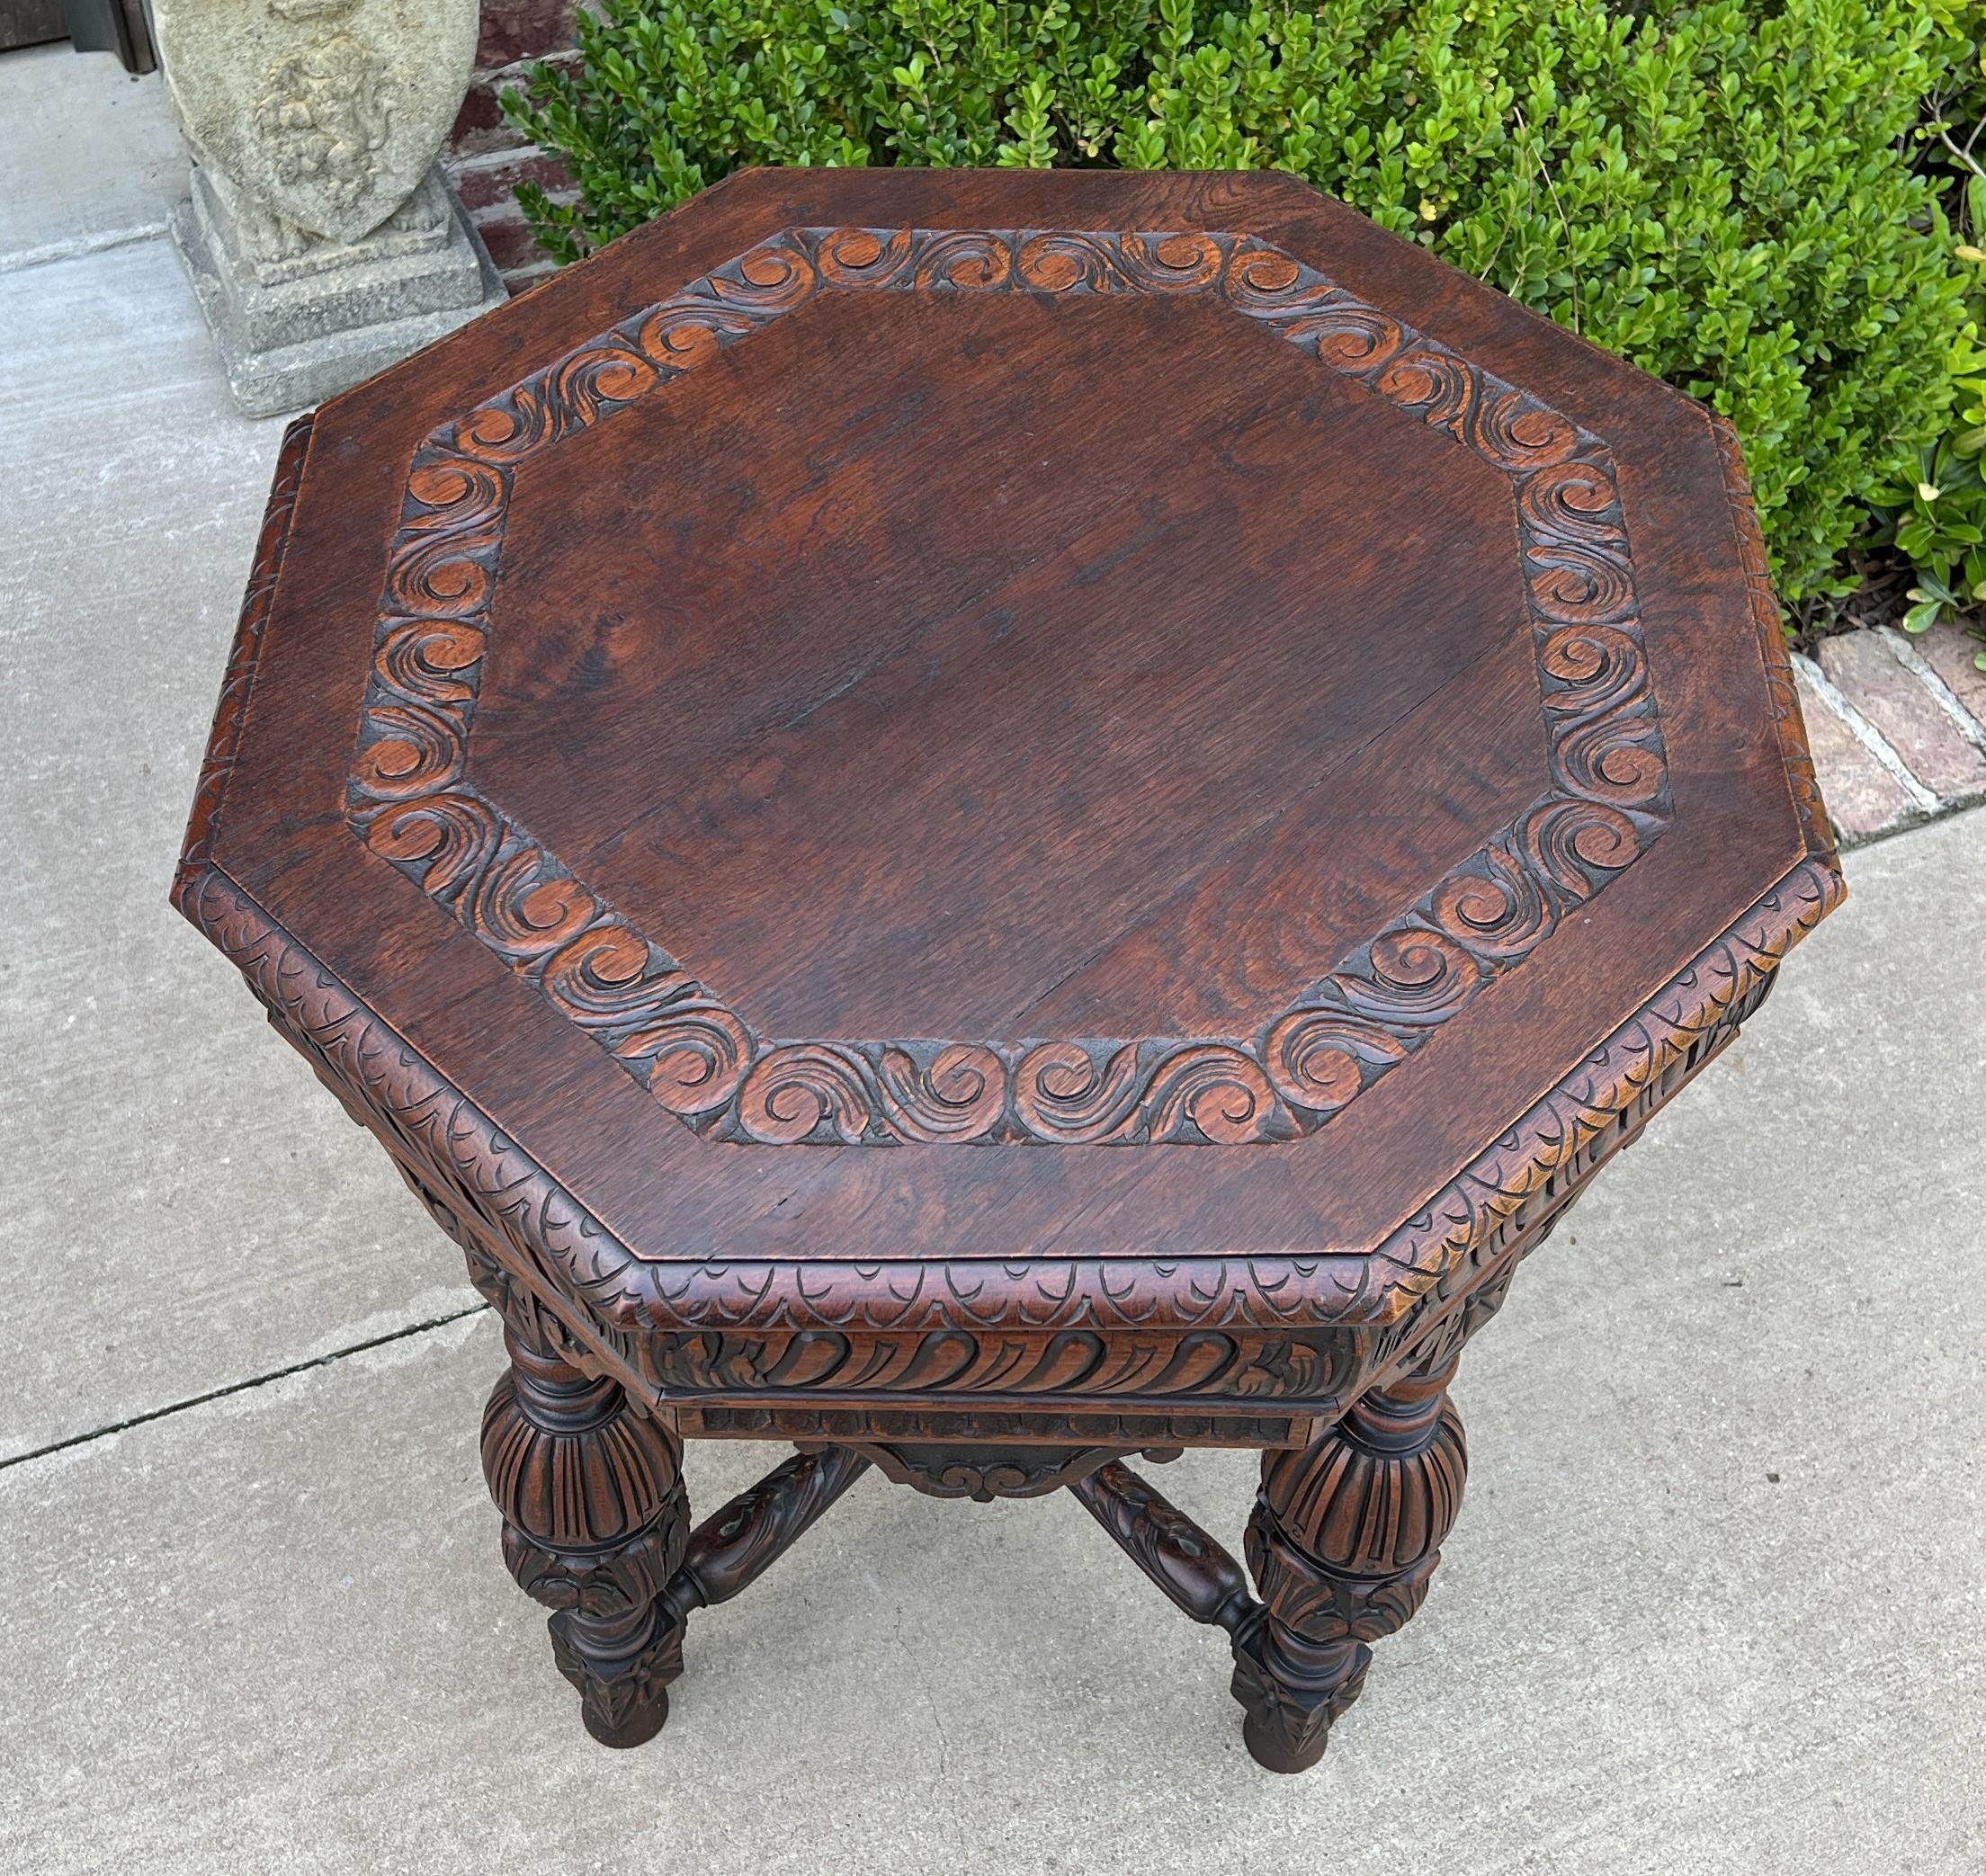 Antique French Table Octagonal Renaissance Revival Carved Oak, 19th Century For Sale 5